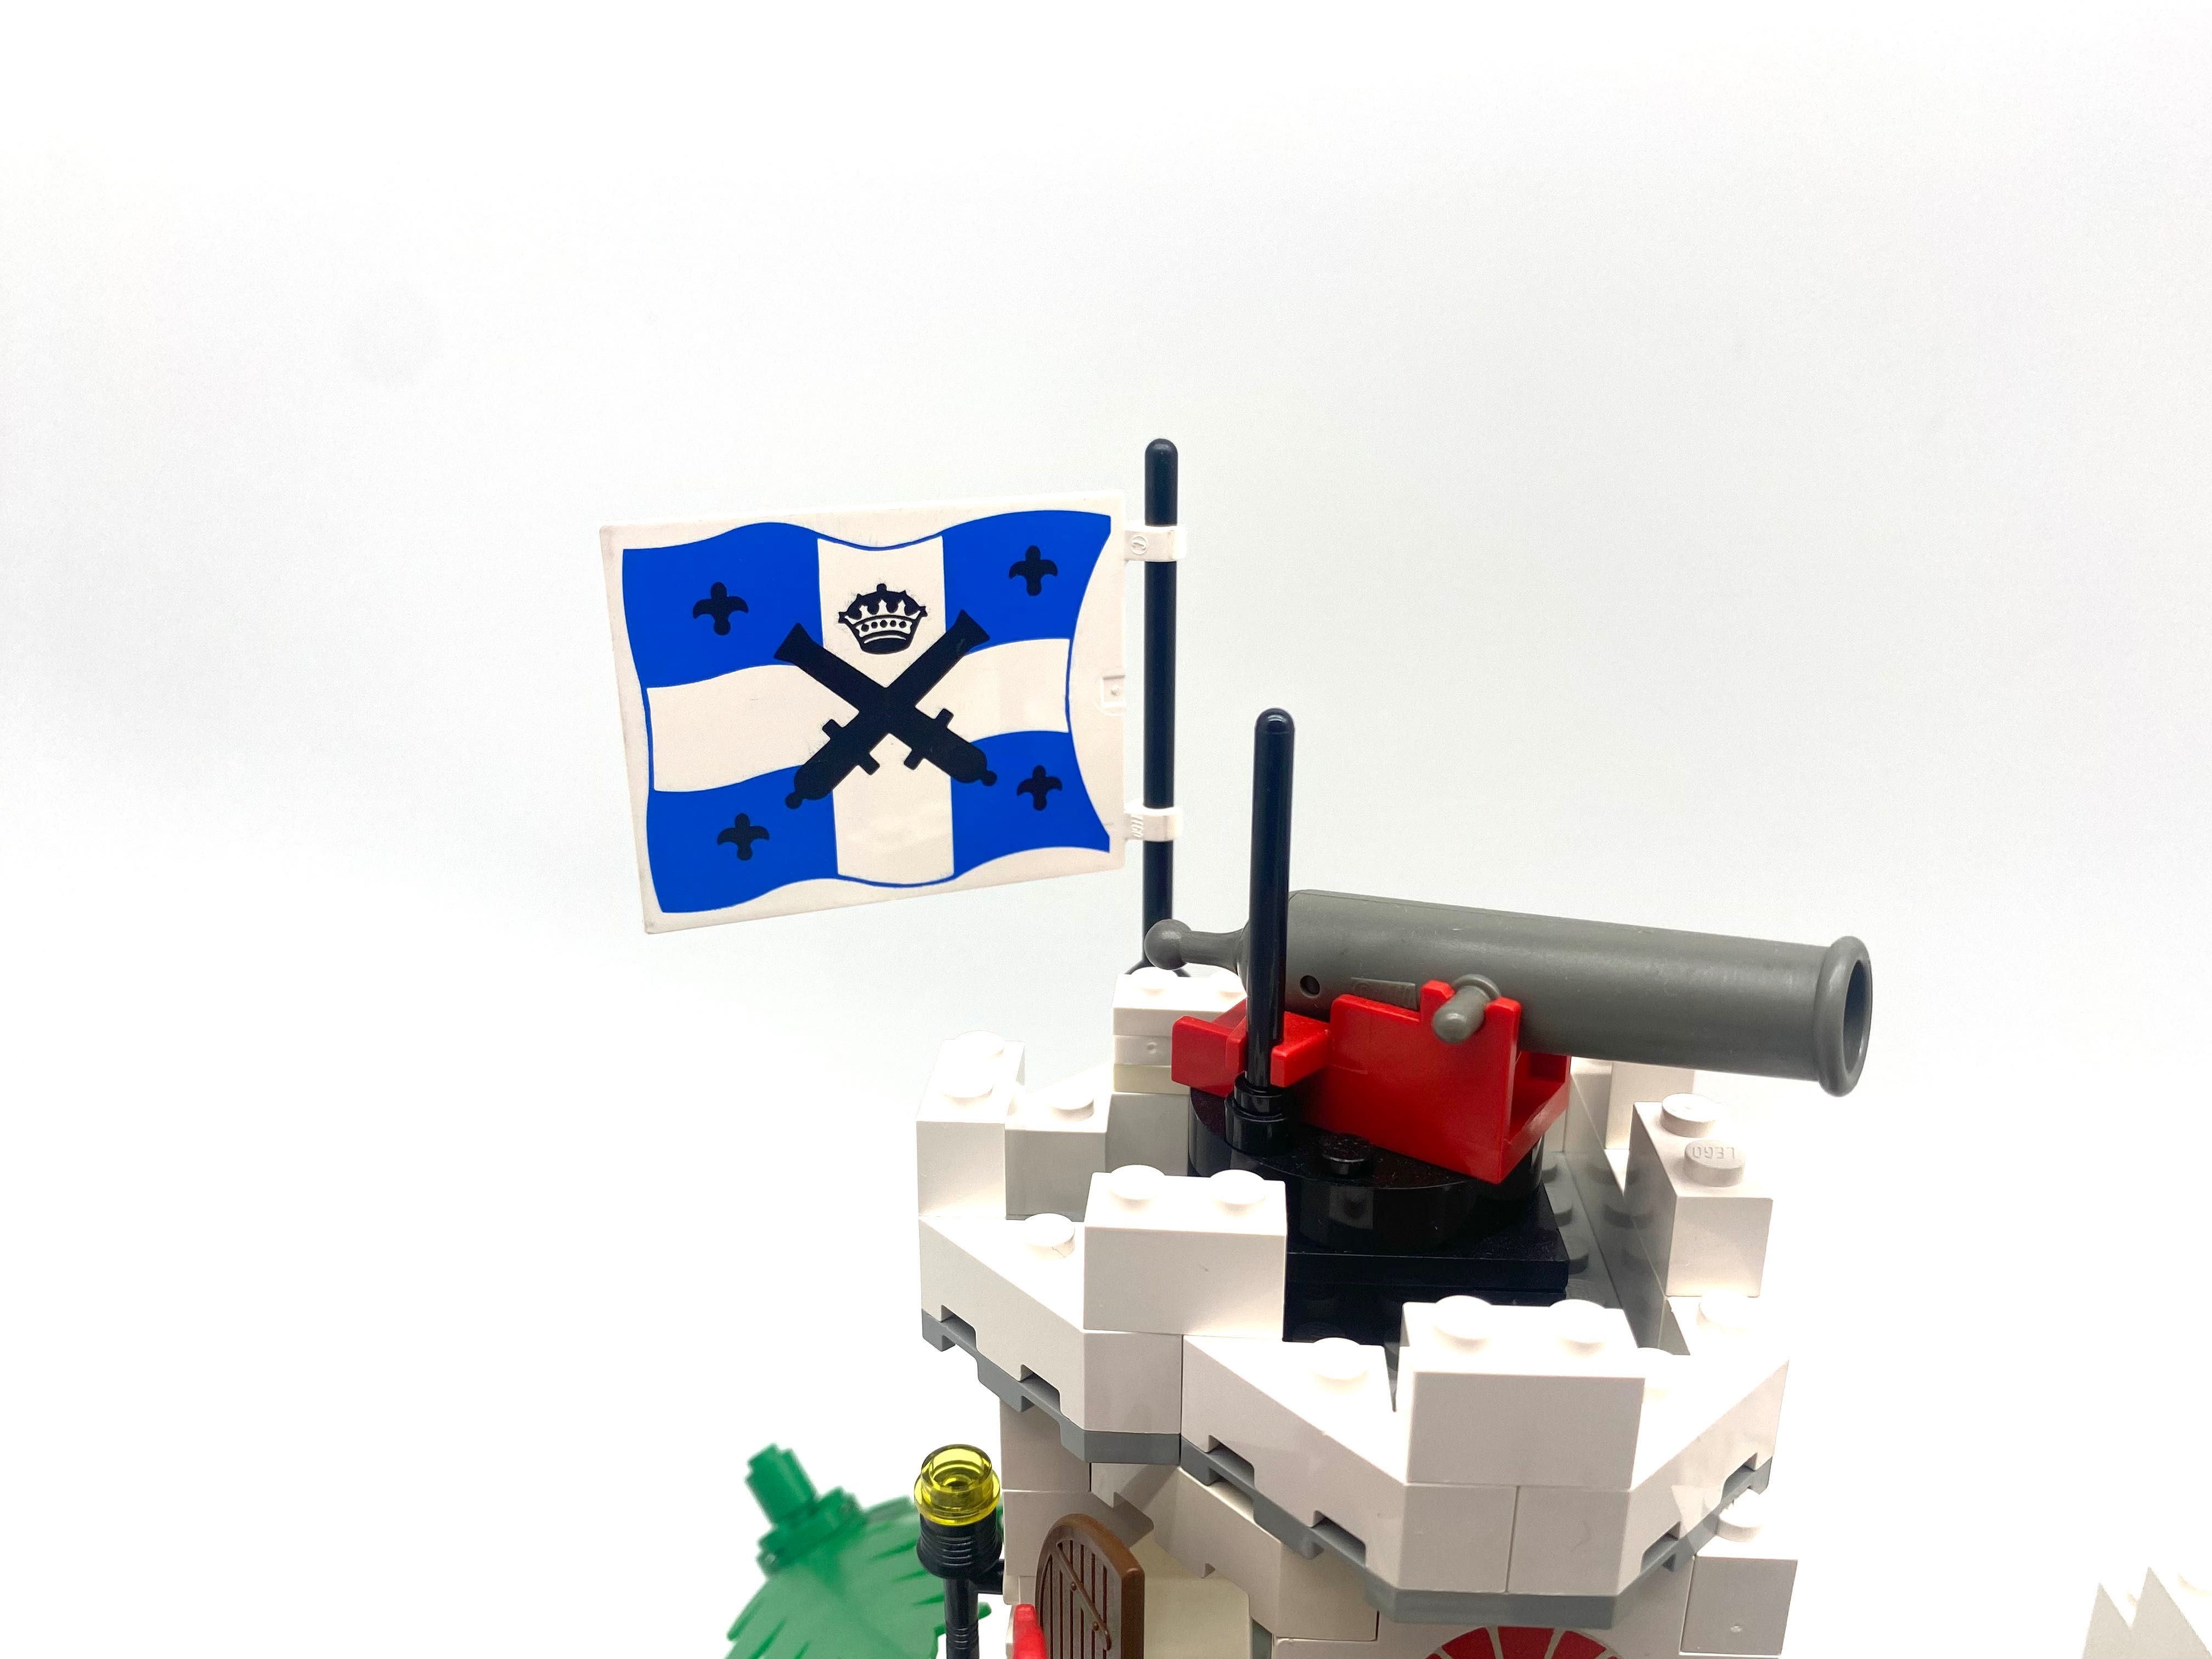 Lego 6276: Eldorado Fortress z 1989 roku.